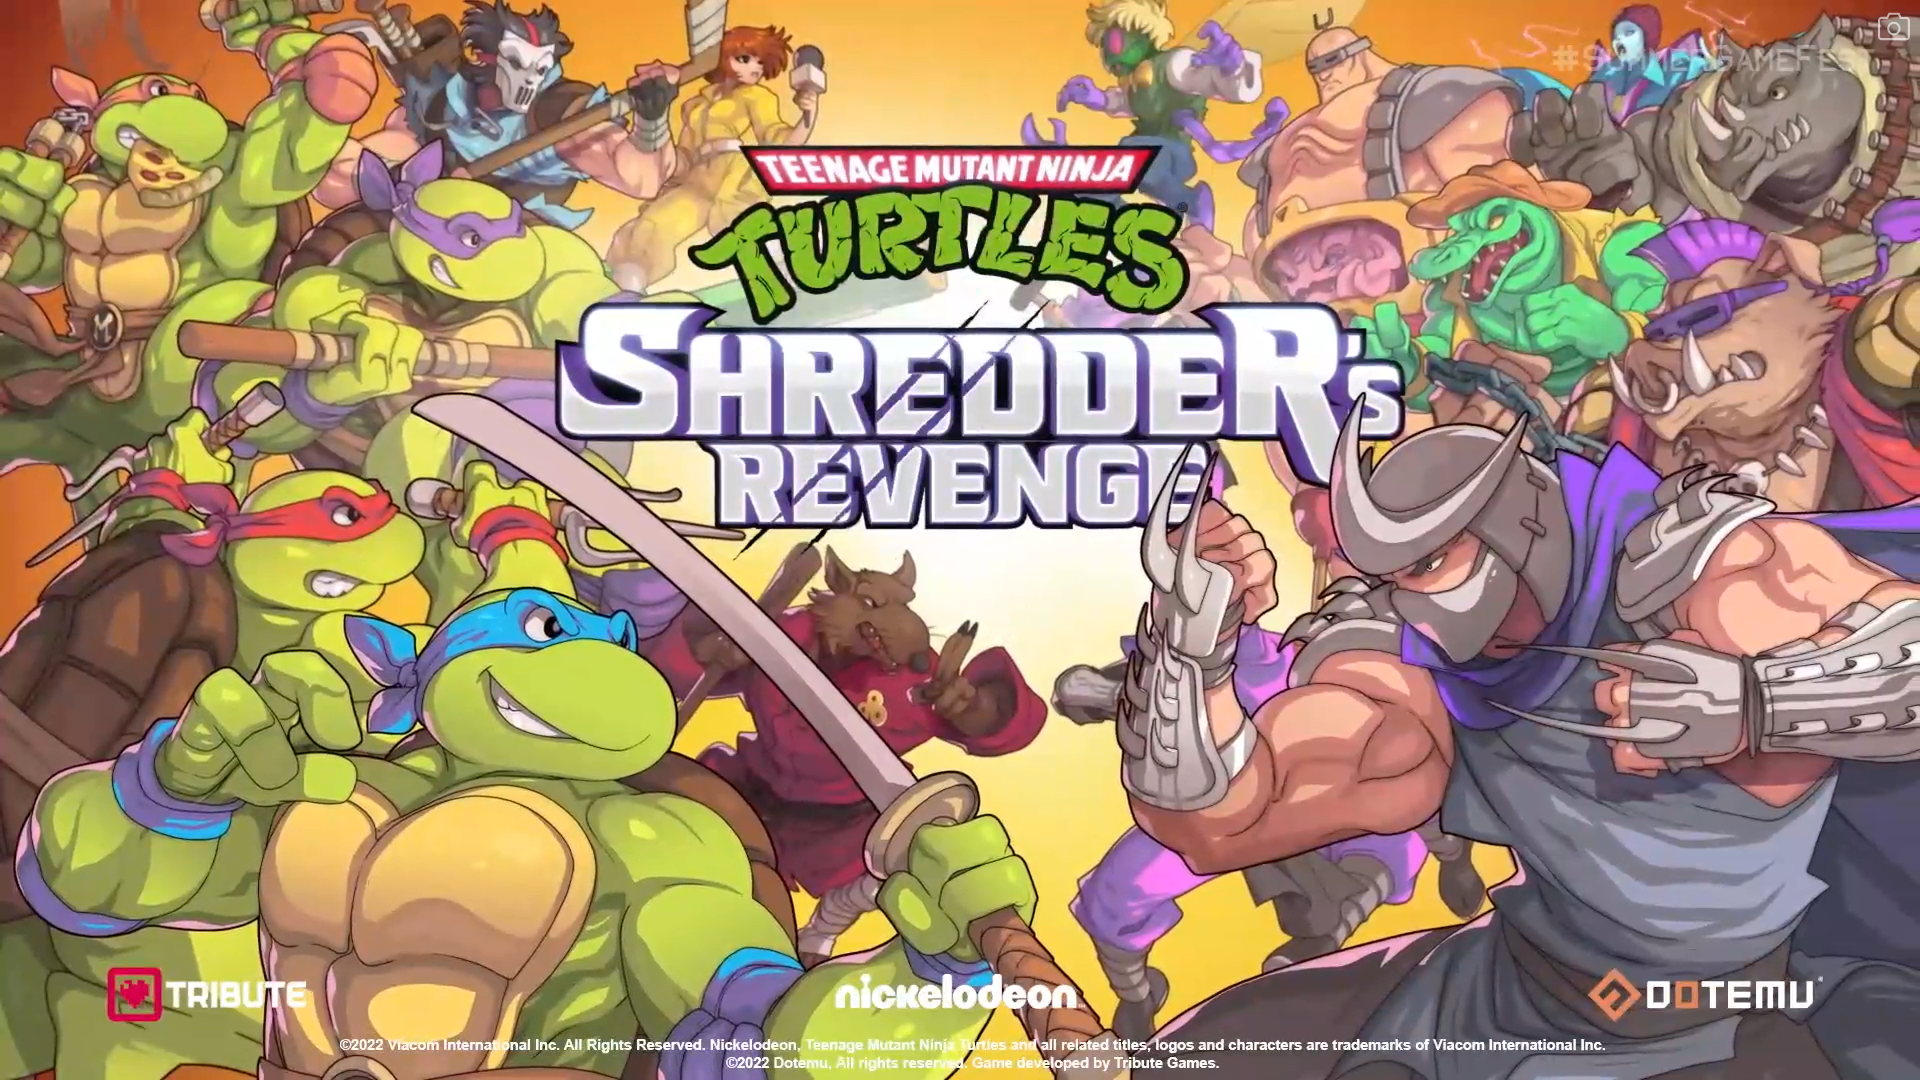 Tmnt shredder android. Шредер Ревендж. Черепашки ниндзя игра 2022. Teenage Mutant Ninja Turtles Shredder s Revenge. Черепашки 2022 игра.